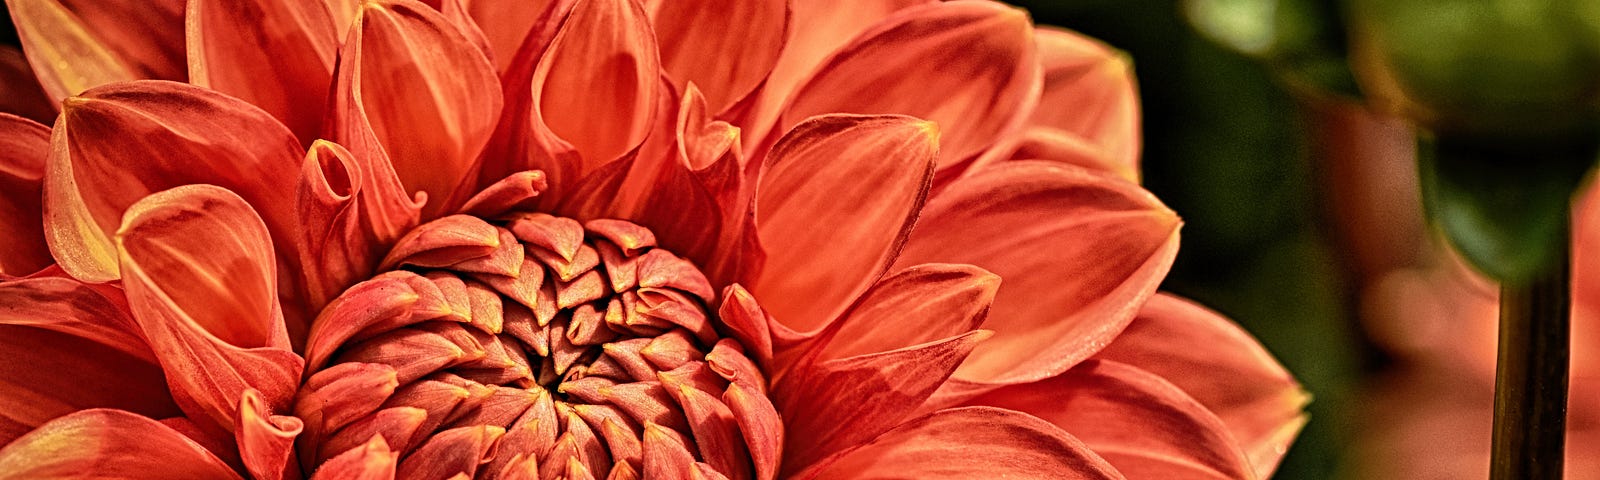 Closeup photo of open, bright orange dahlia.